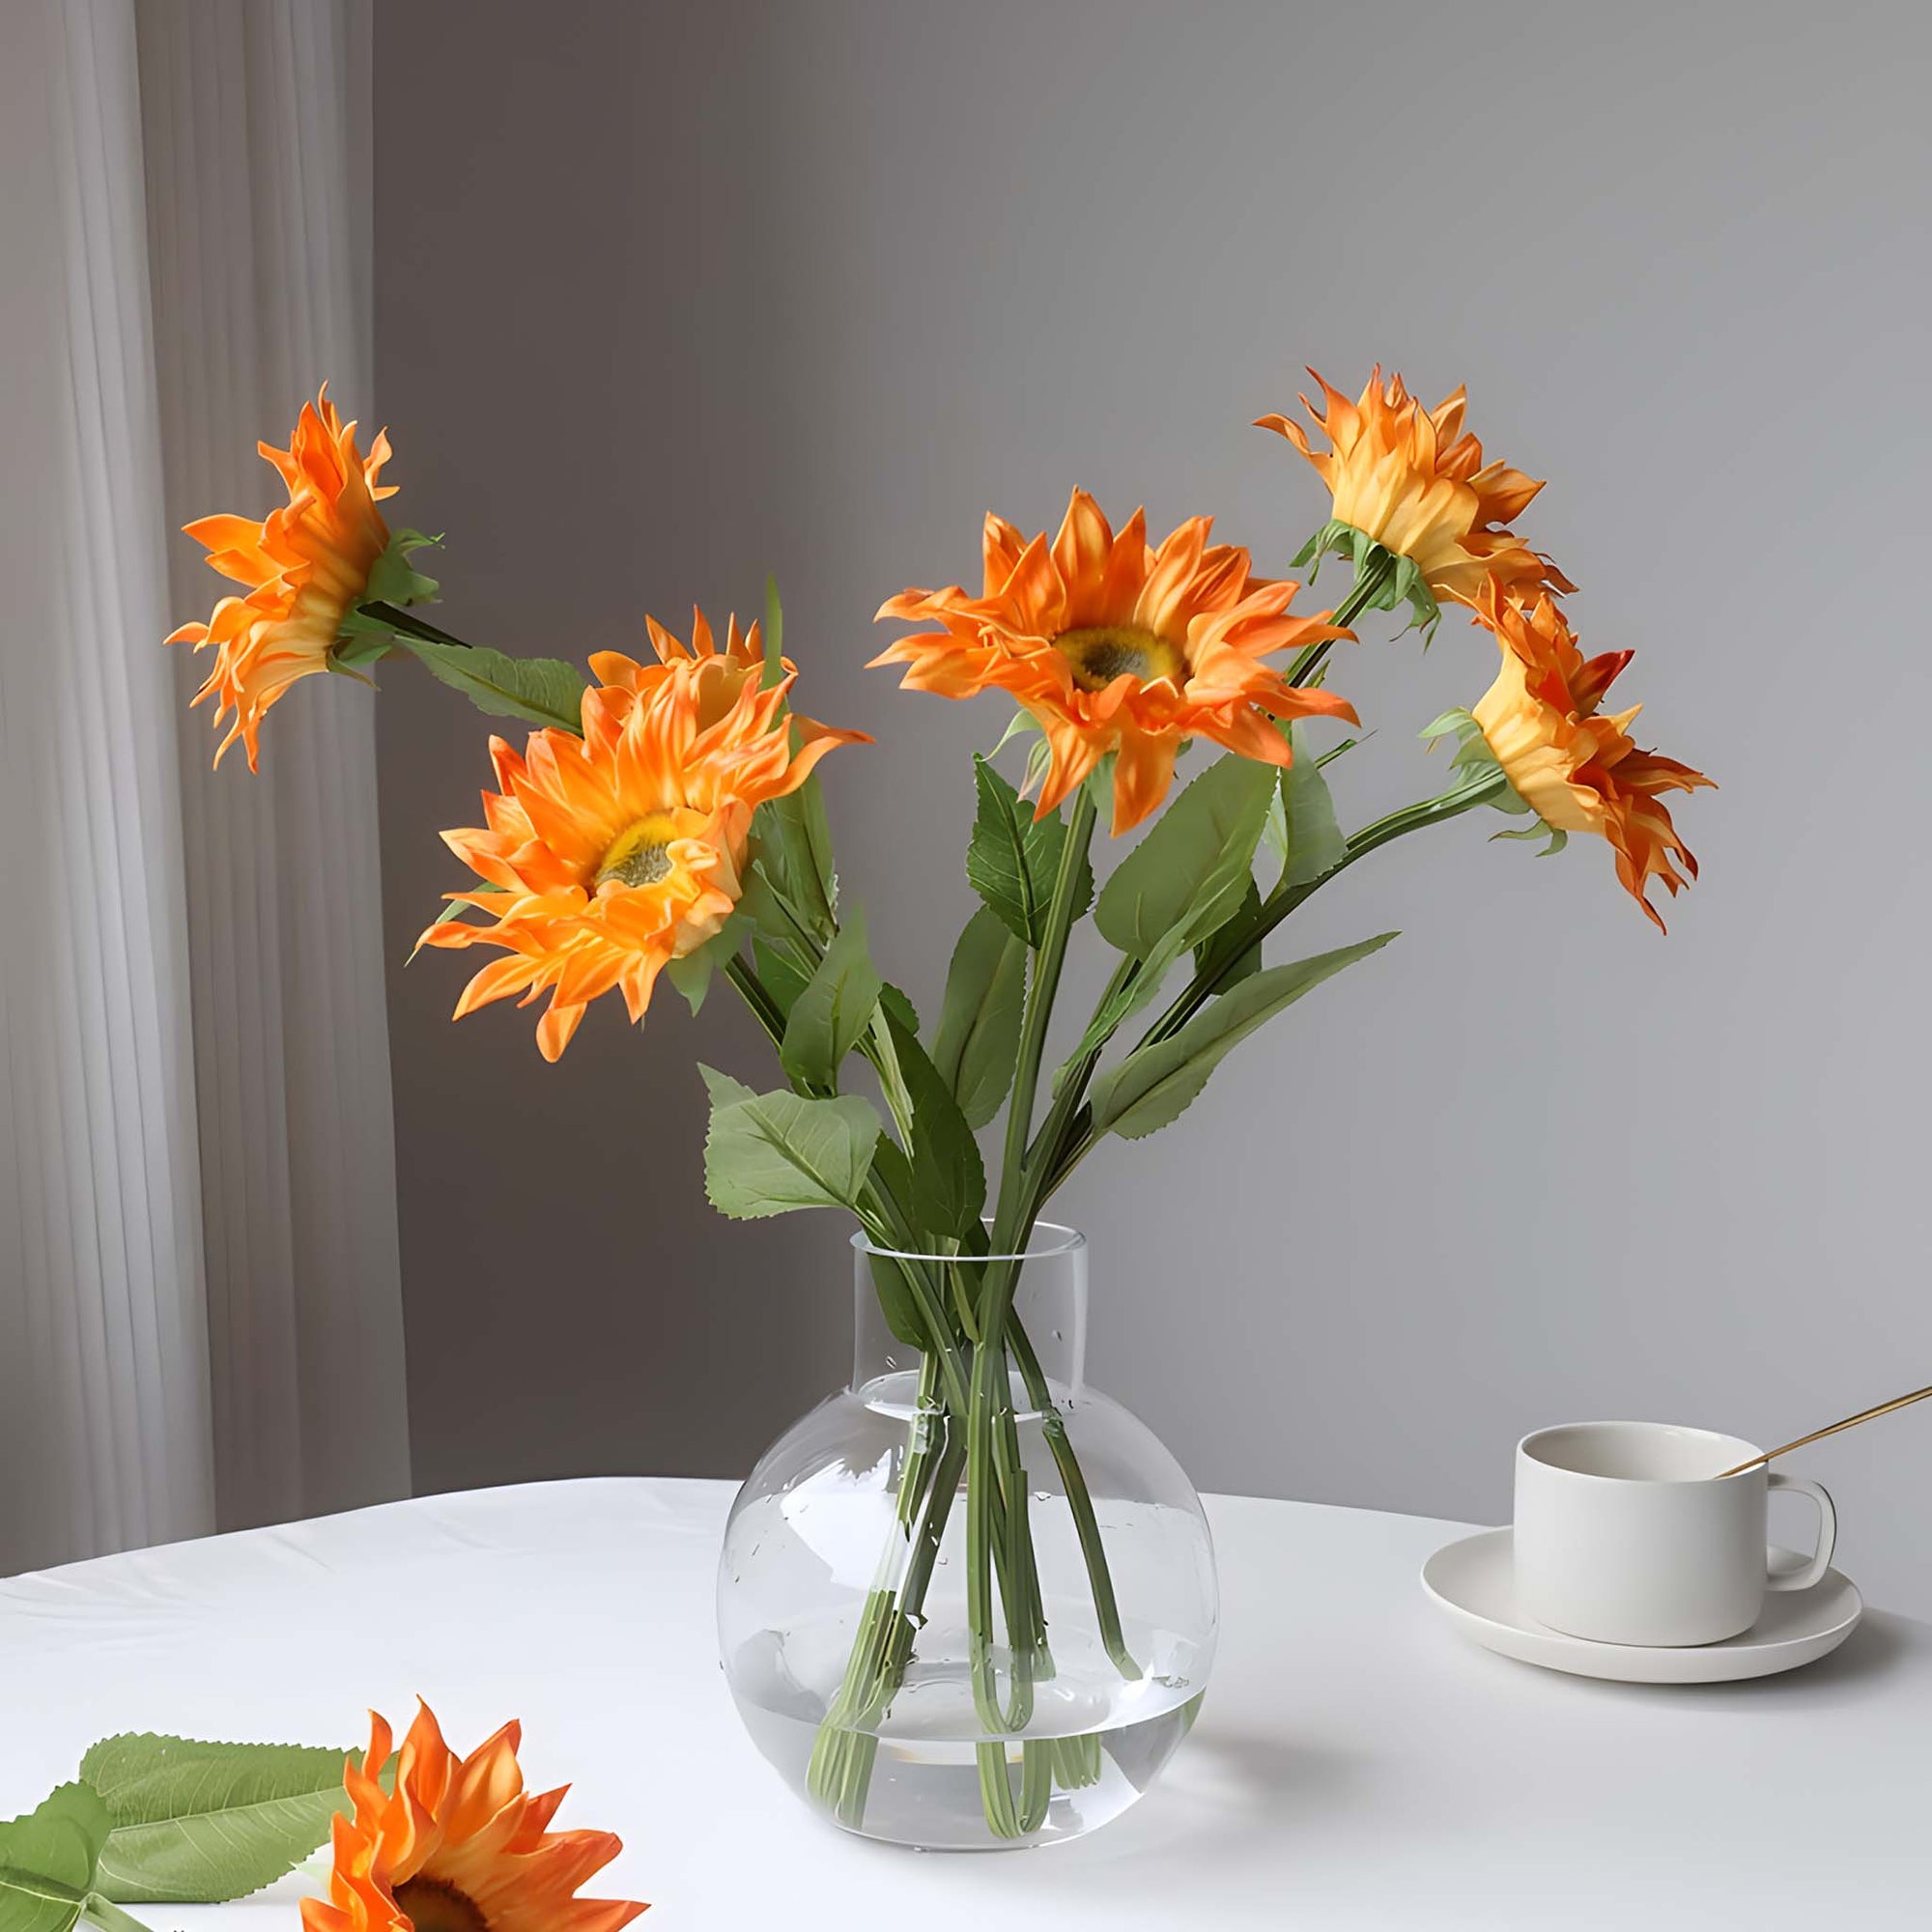 Realistic Artificial Sunflowers Yellow Orange 18.5"